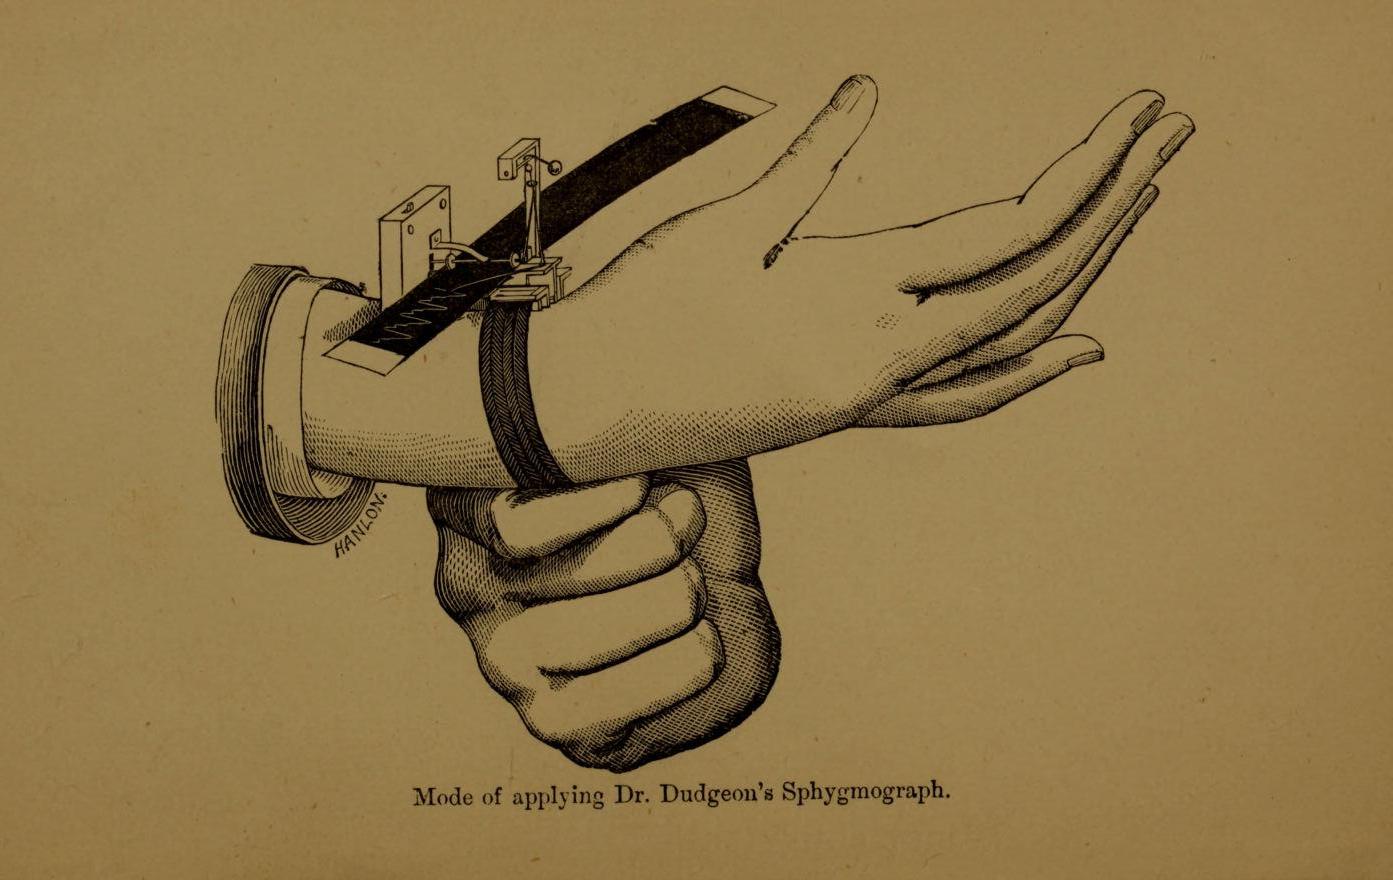 Sphygmograph